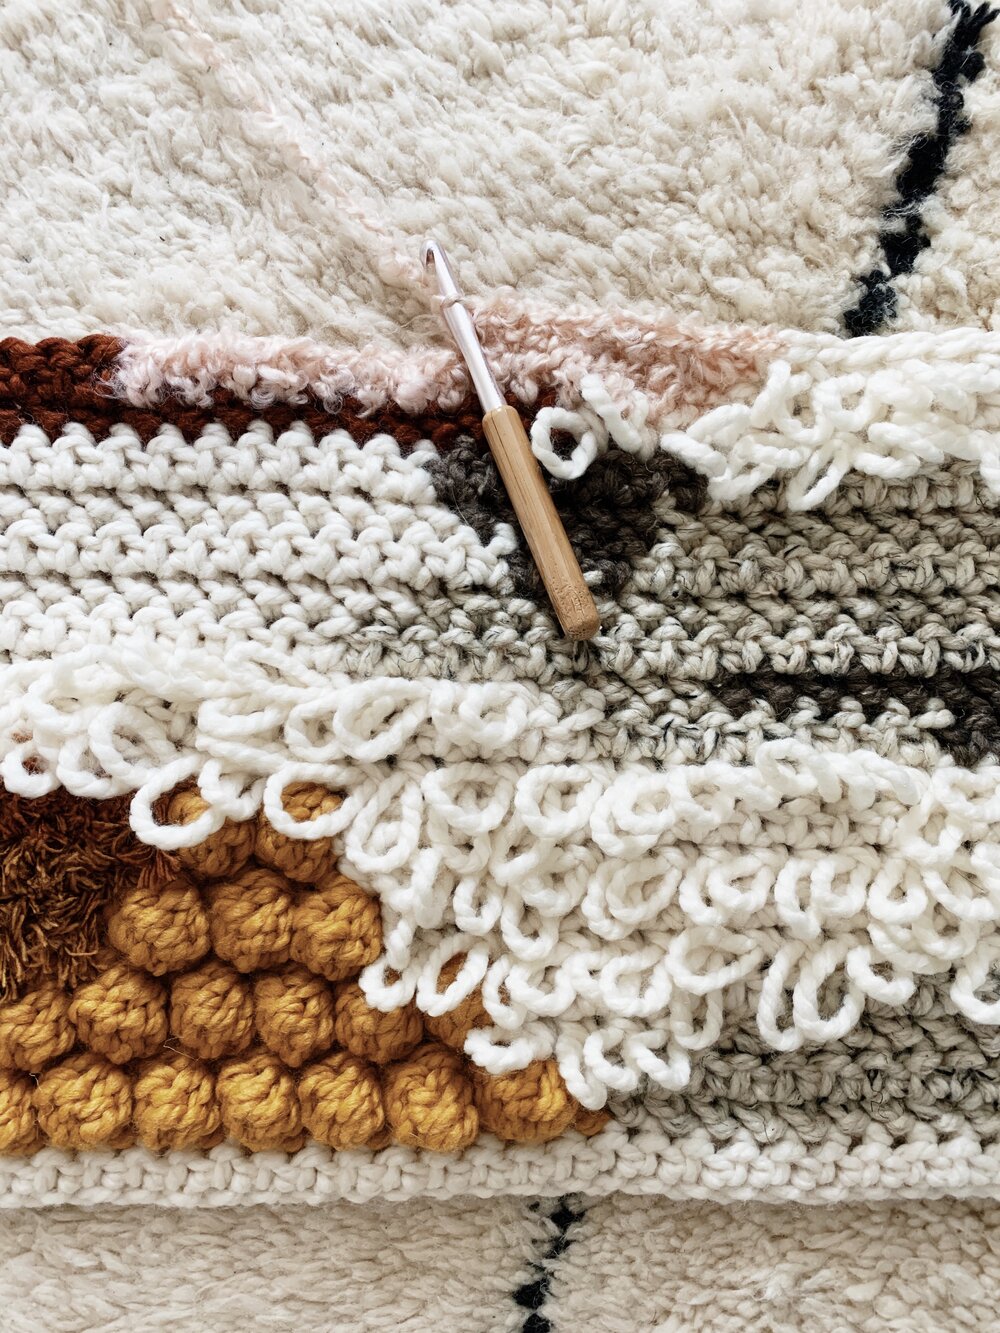 Daybreak Crochet Tapestry pattern by Two of Wands